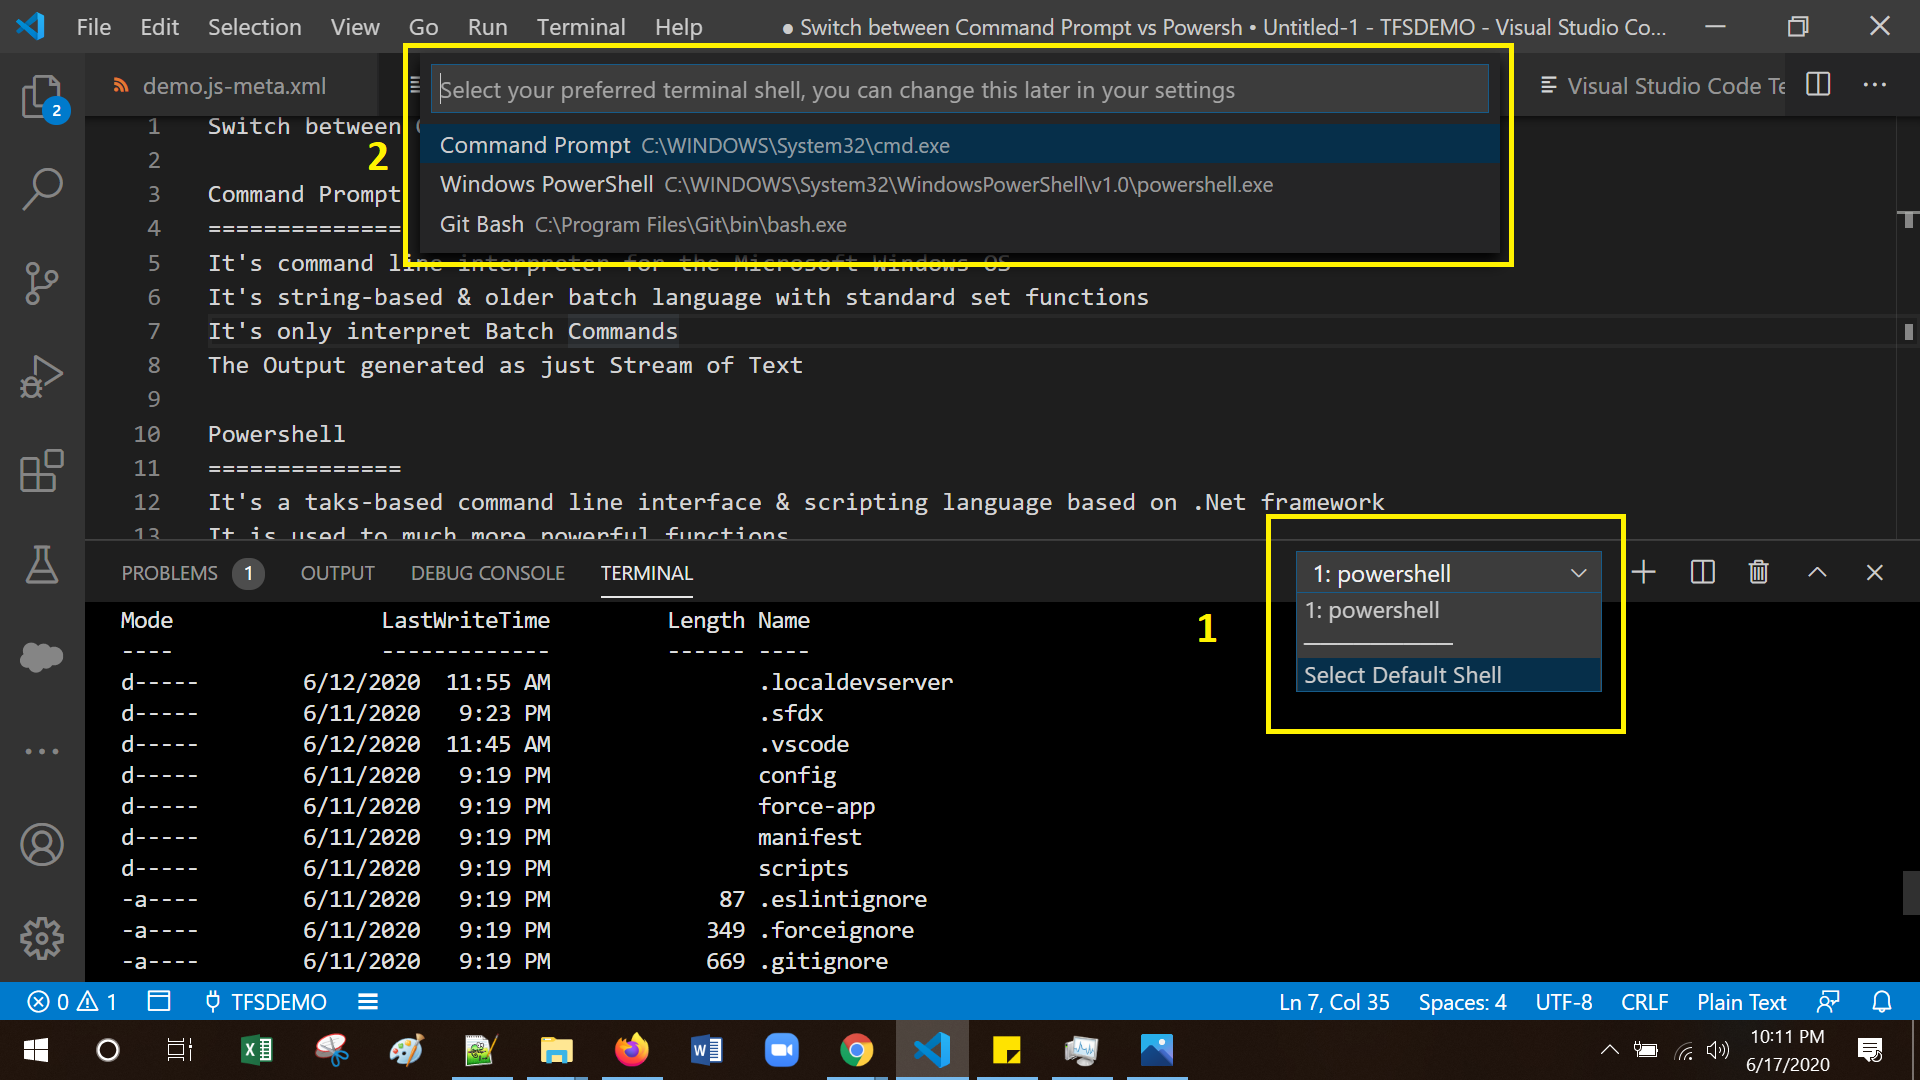 Visual Studio Code Tips - Switch between Command Prompt vs Powershell in  Visual Studio Code Terminal 